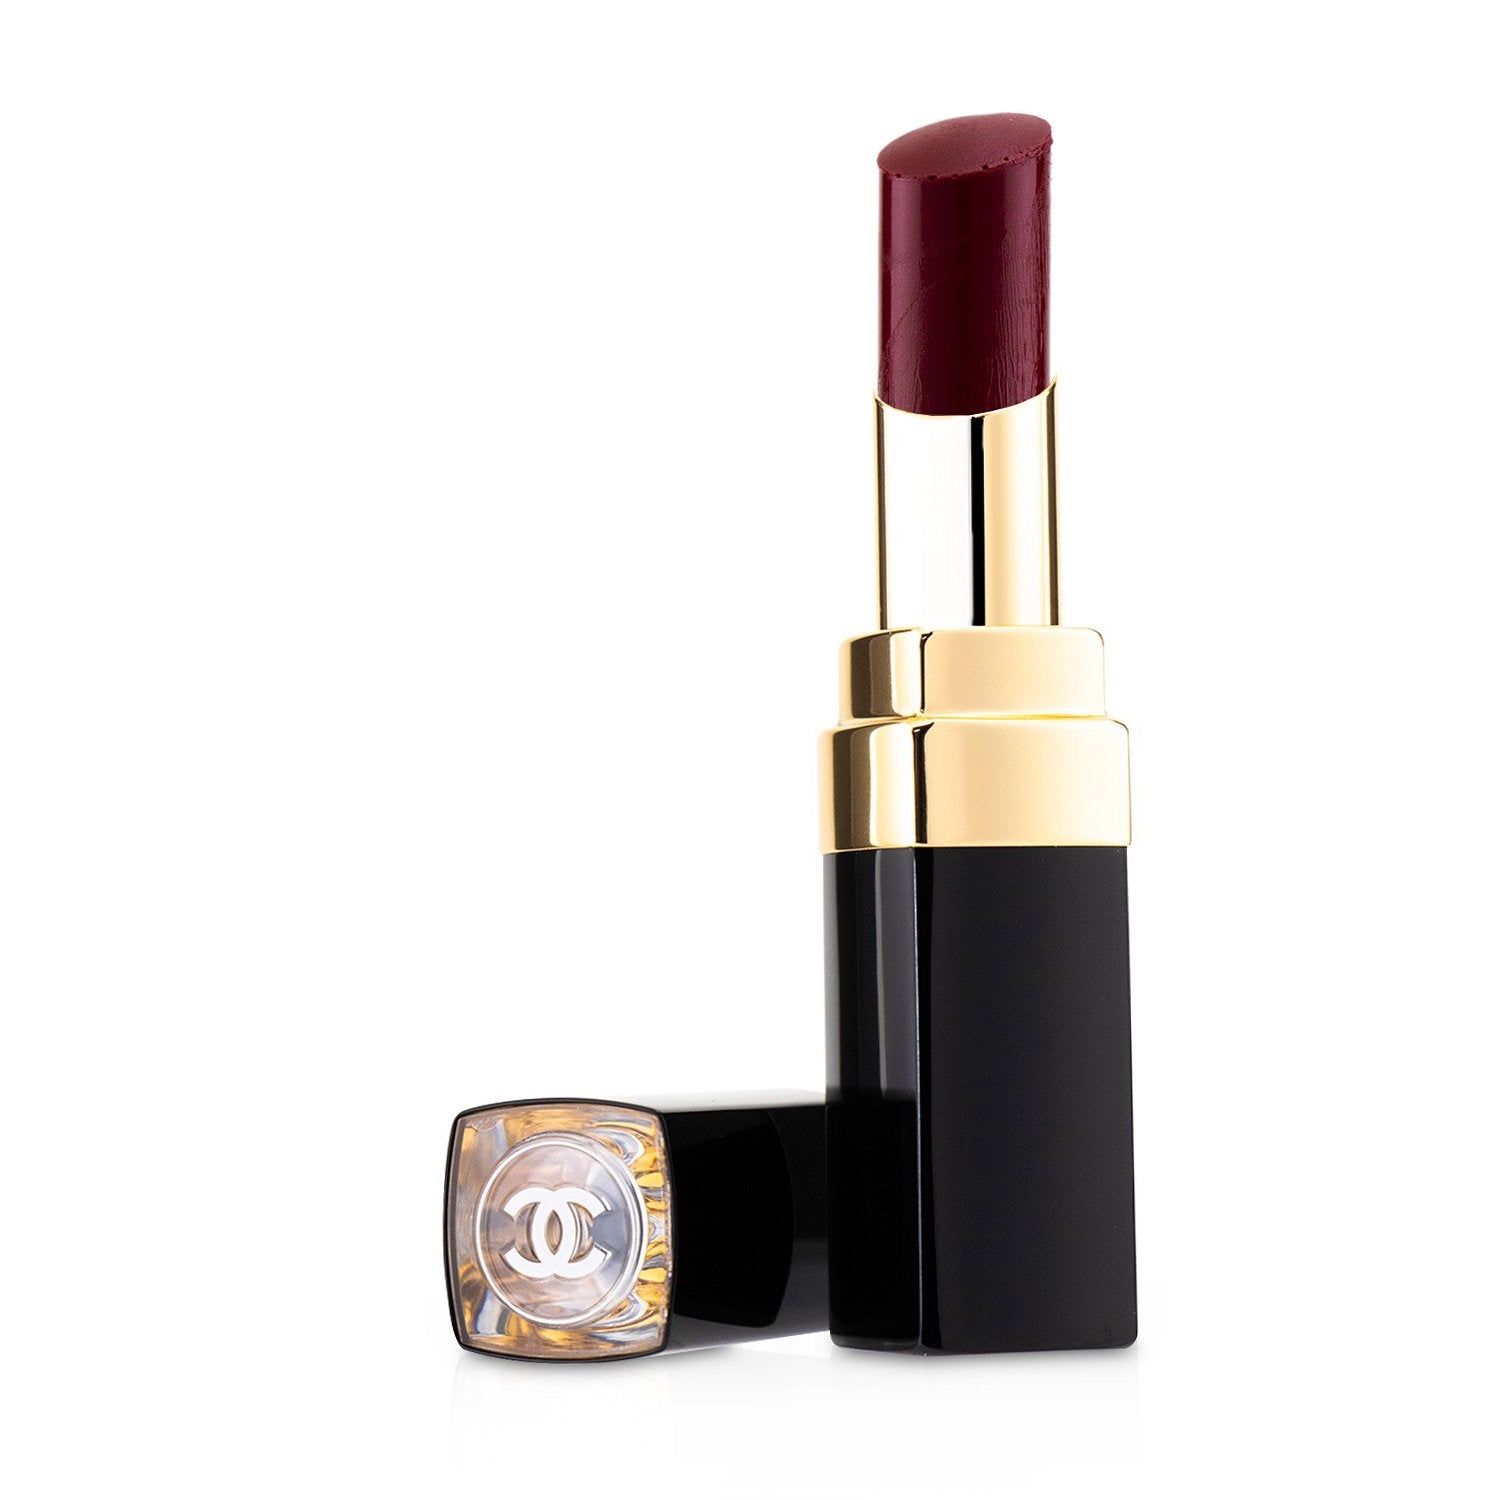 Chanel Rouge Coco Flash Hydrating Vibrant Shine Lip Colour - # 92